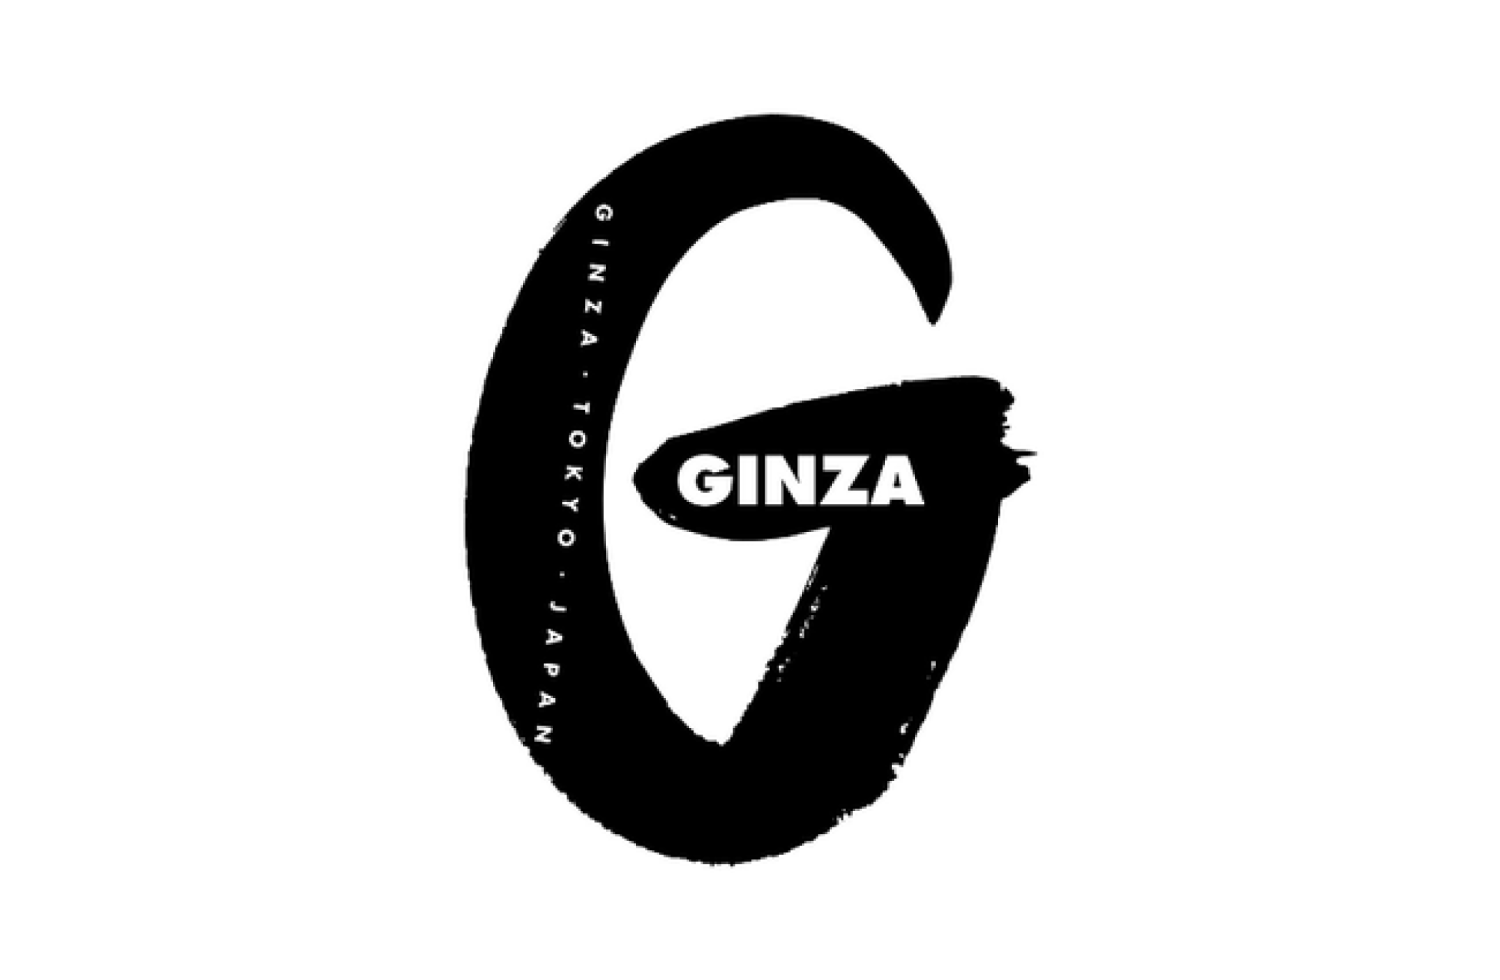 PRESS : GINZA